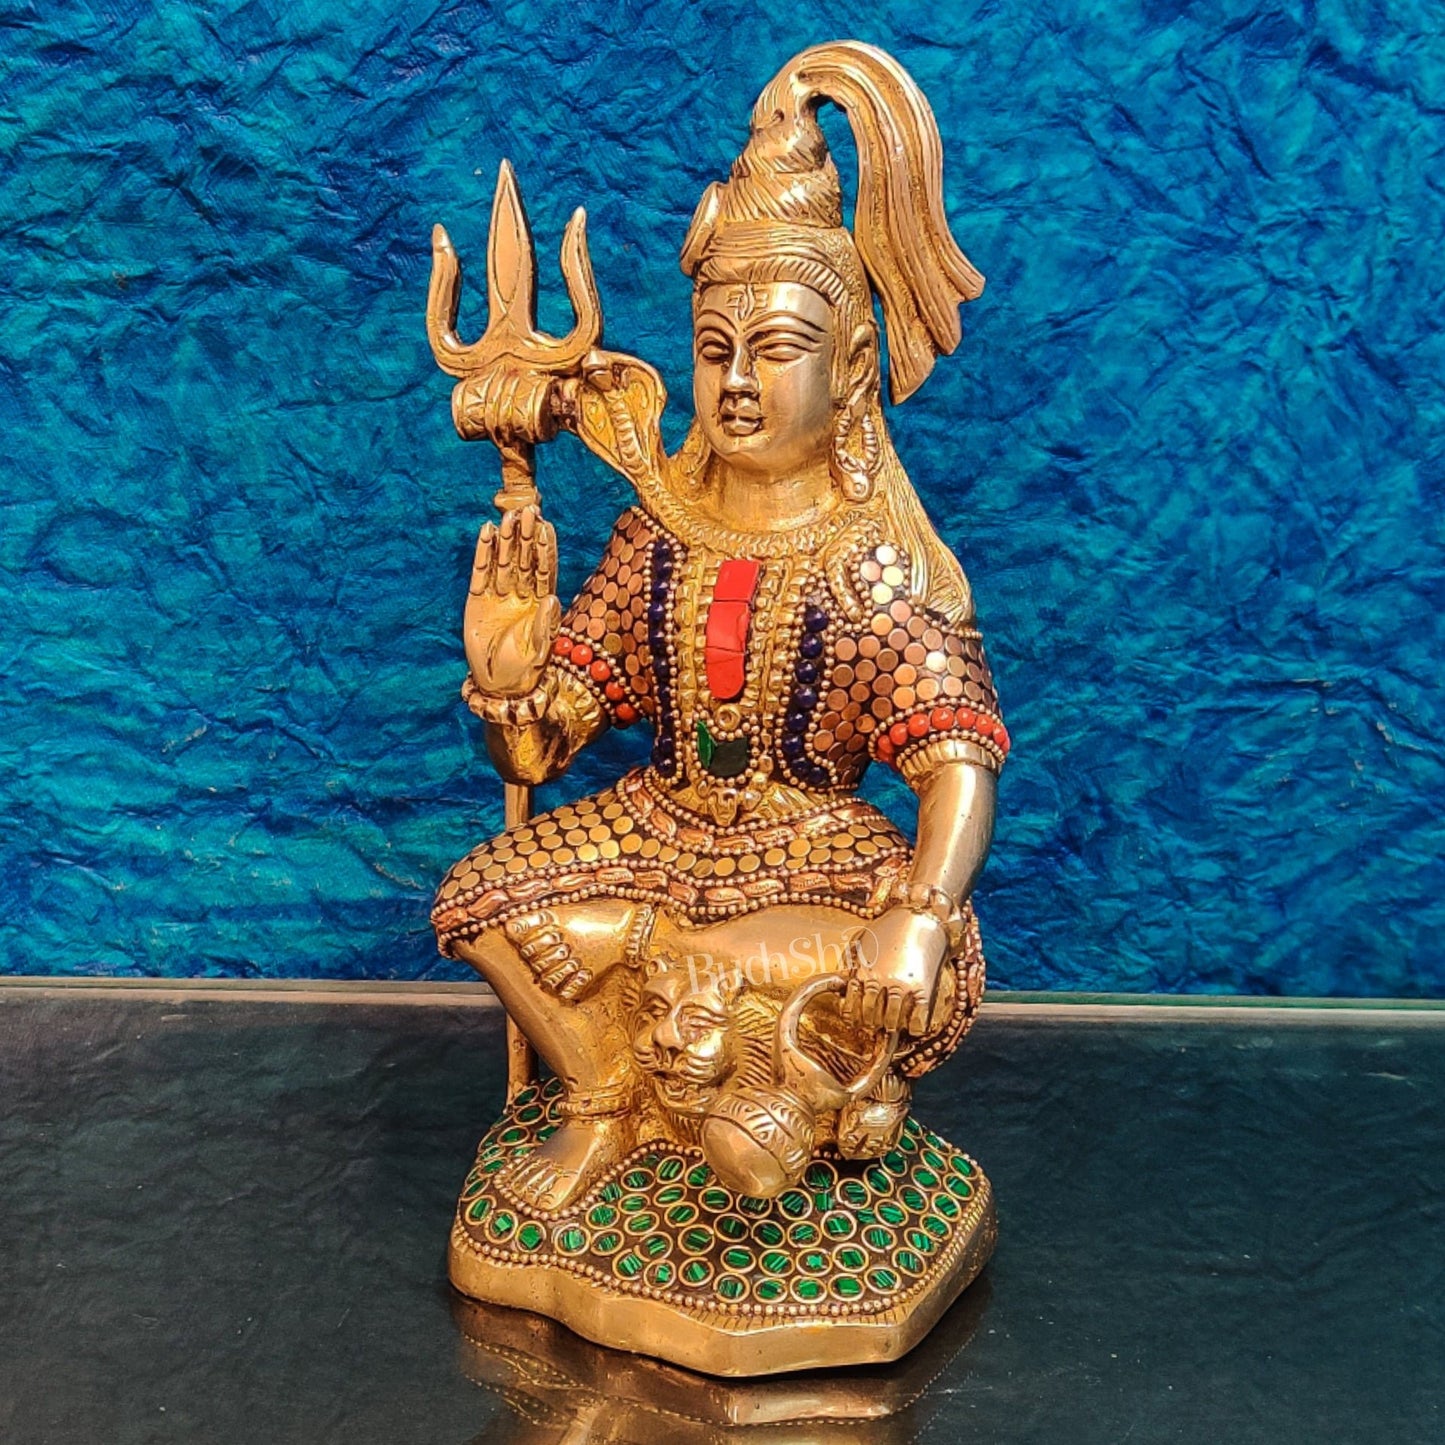 Handcrafted Brass Lord Shiva Statue in Aashirwaad Mudra with Lota | Divine Stonework 8.5"" - Budhshiv.com